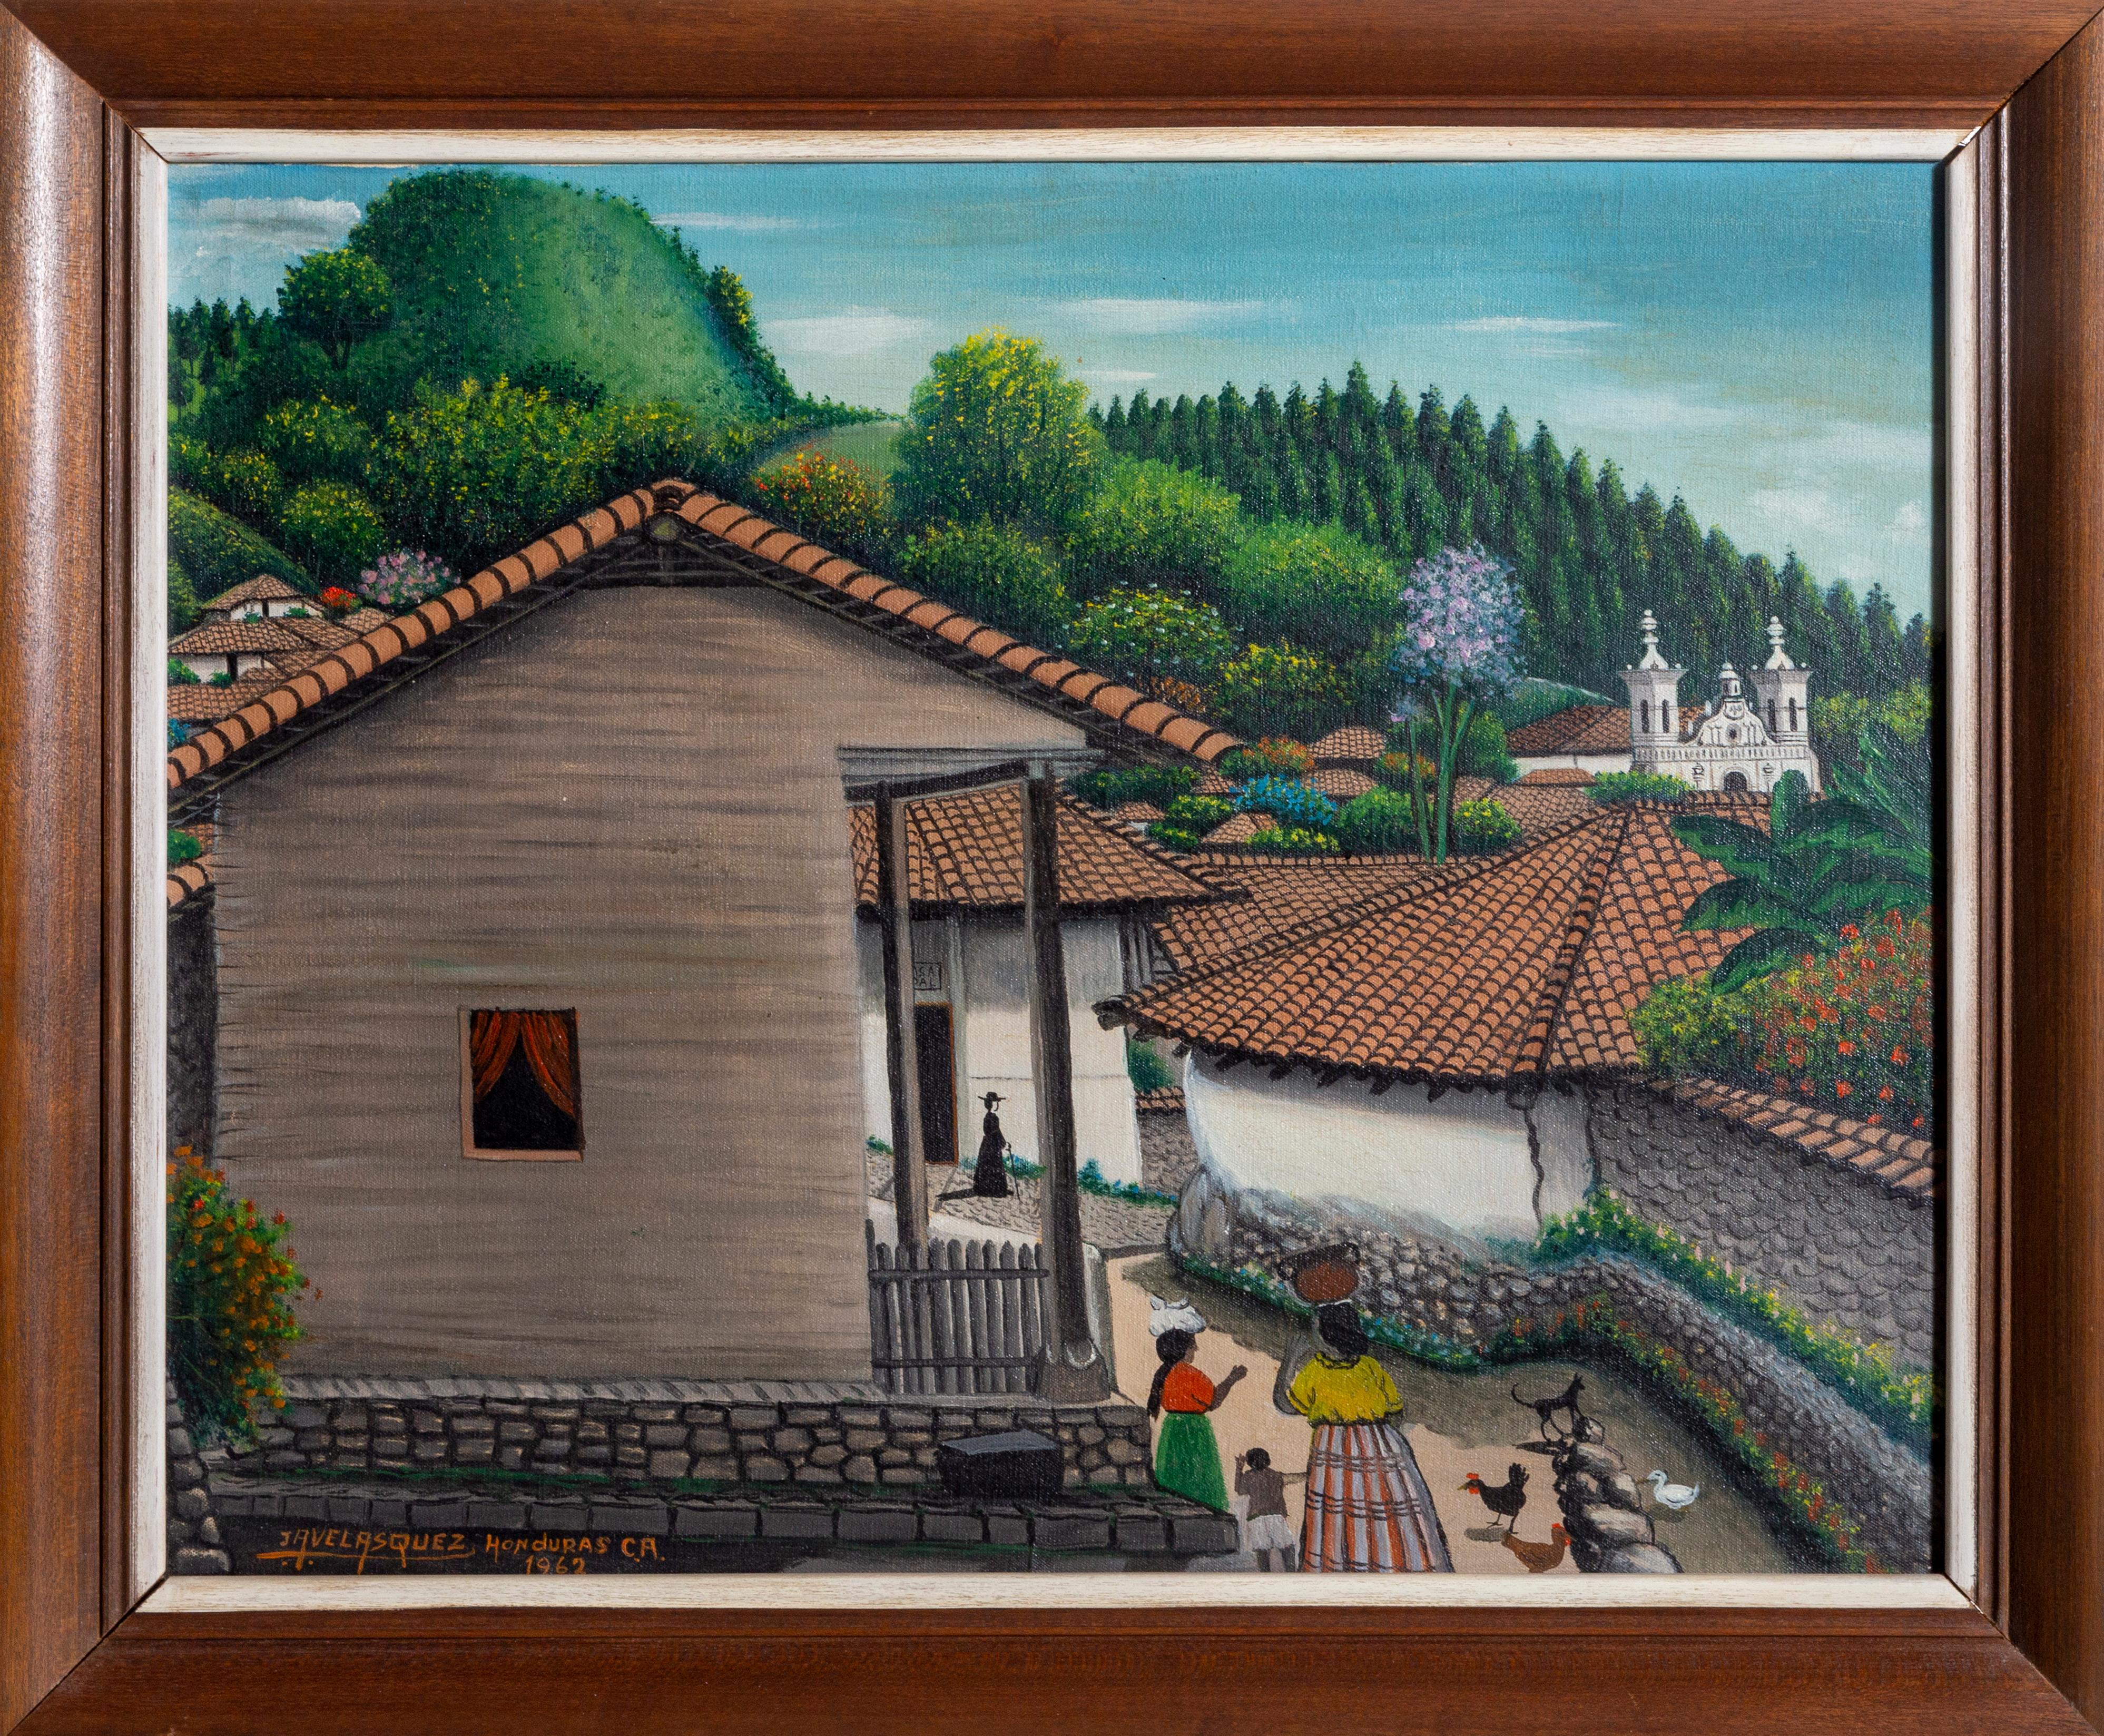 Peinture de Jose Antonio Velasquez représentant San Antonio de Oriente, Honduras, 1962